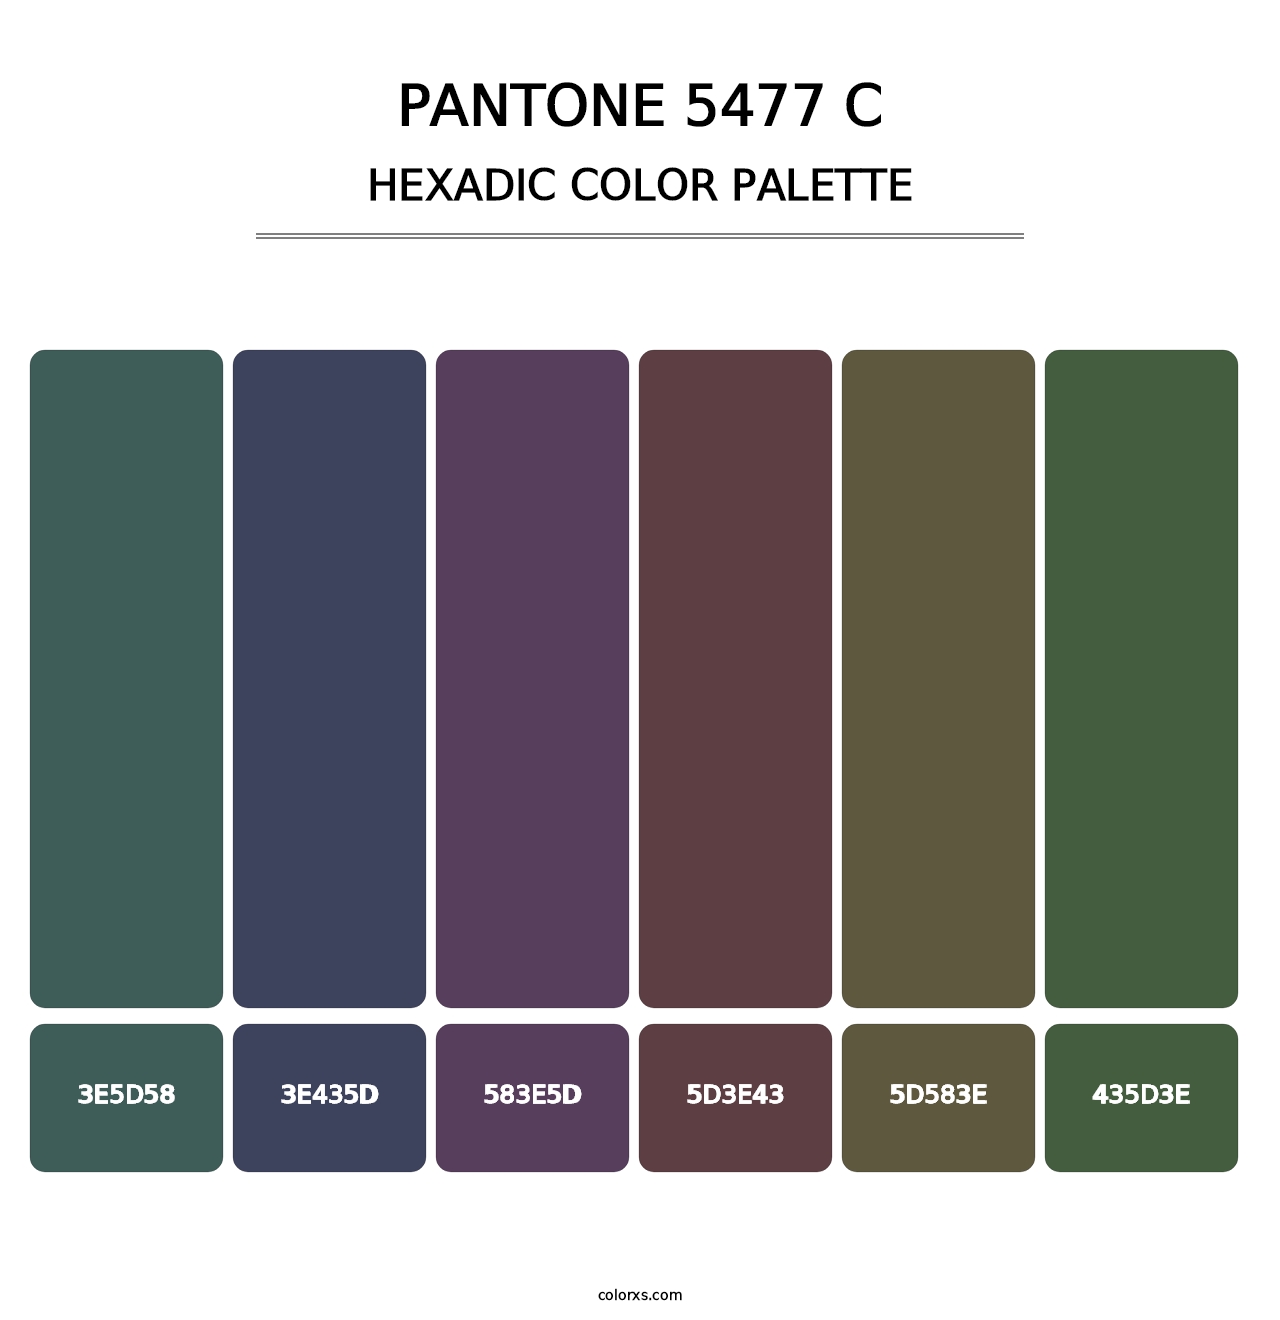 PANTONE 5477 C - Hexadic Color Palette